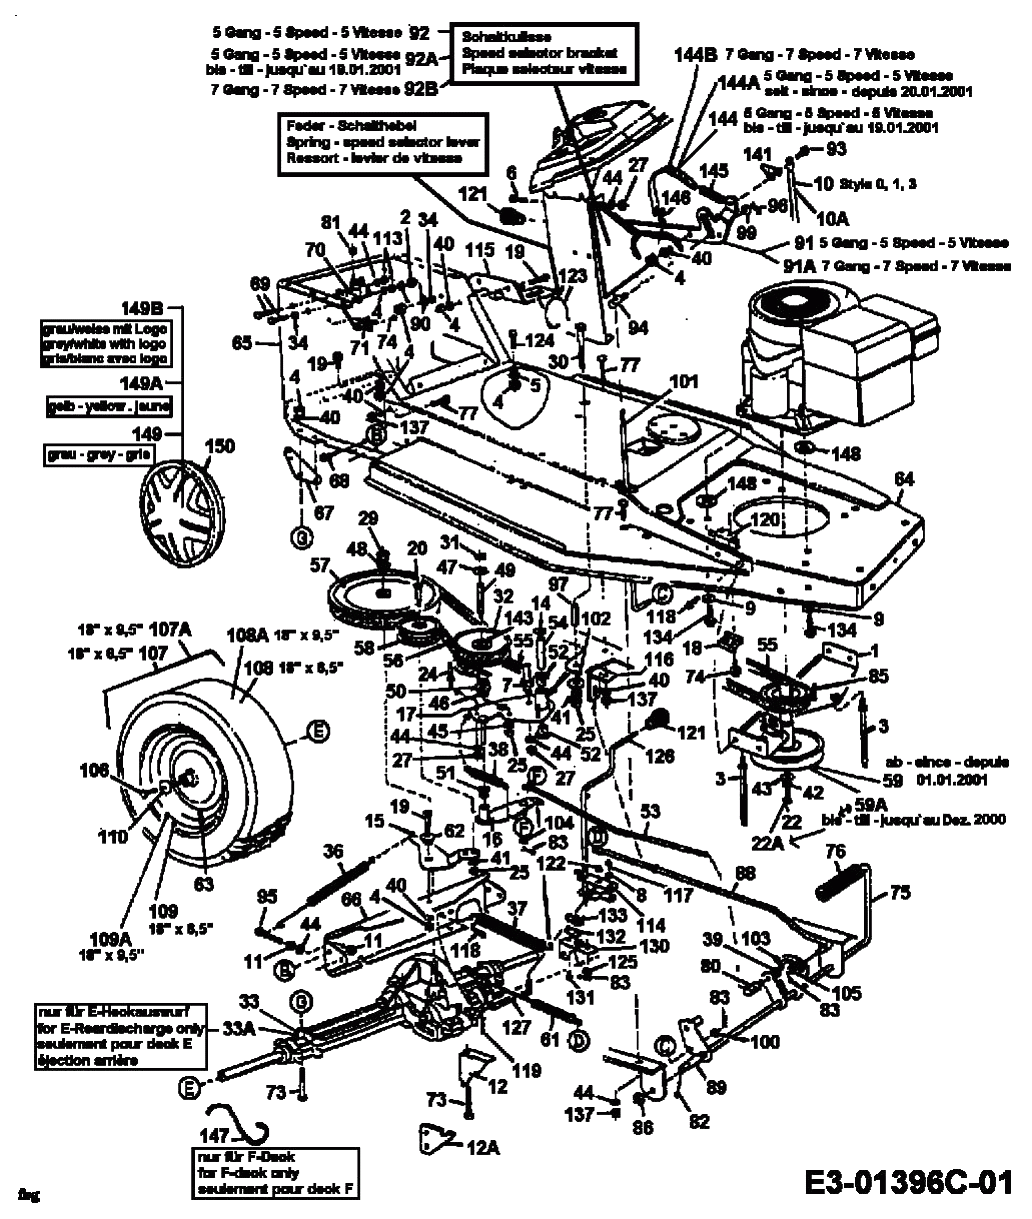 MTD Артикул 13A1458C600 (год выпуска 2003). Система привода, шкив двигателя, педали, задние колеса